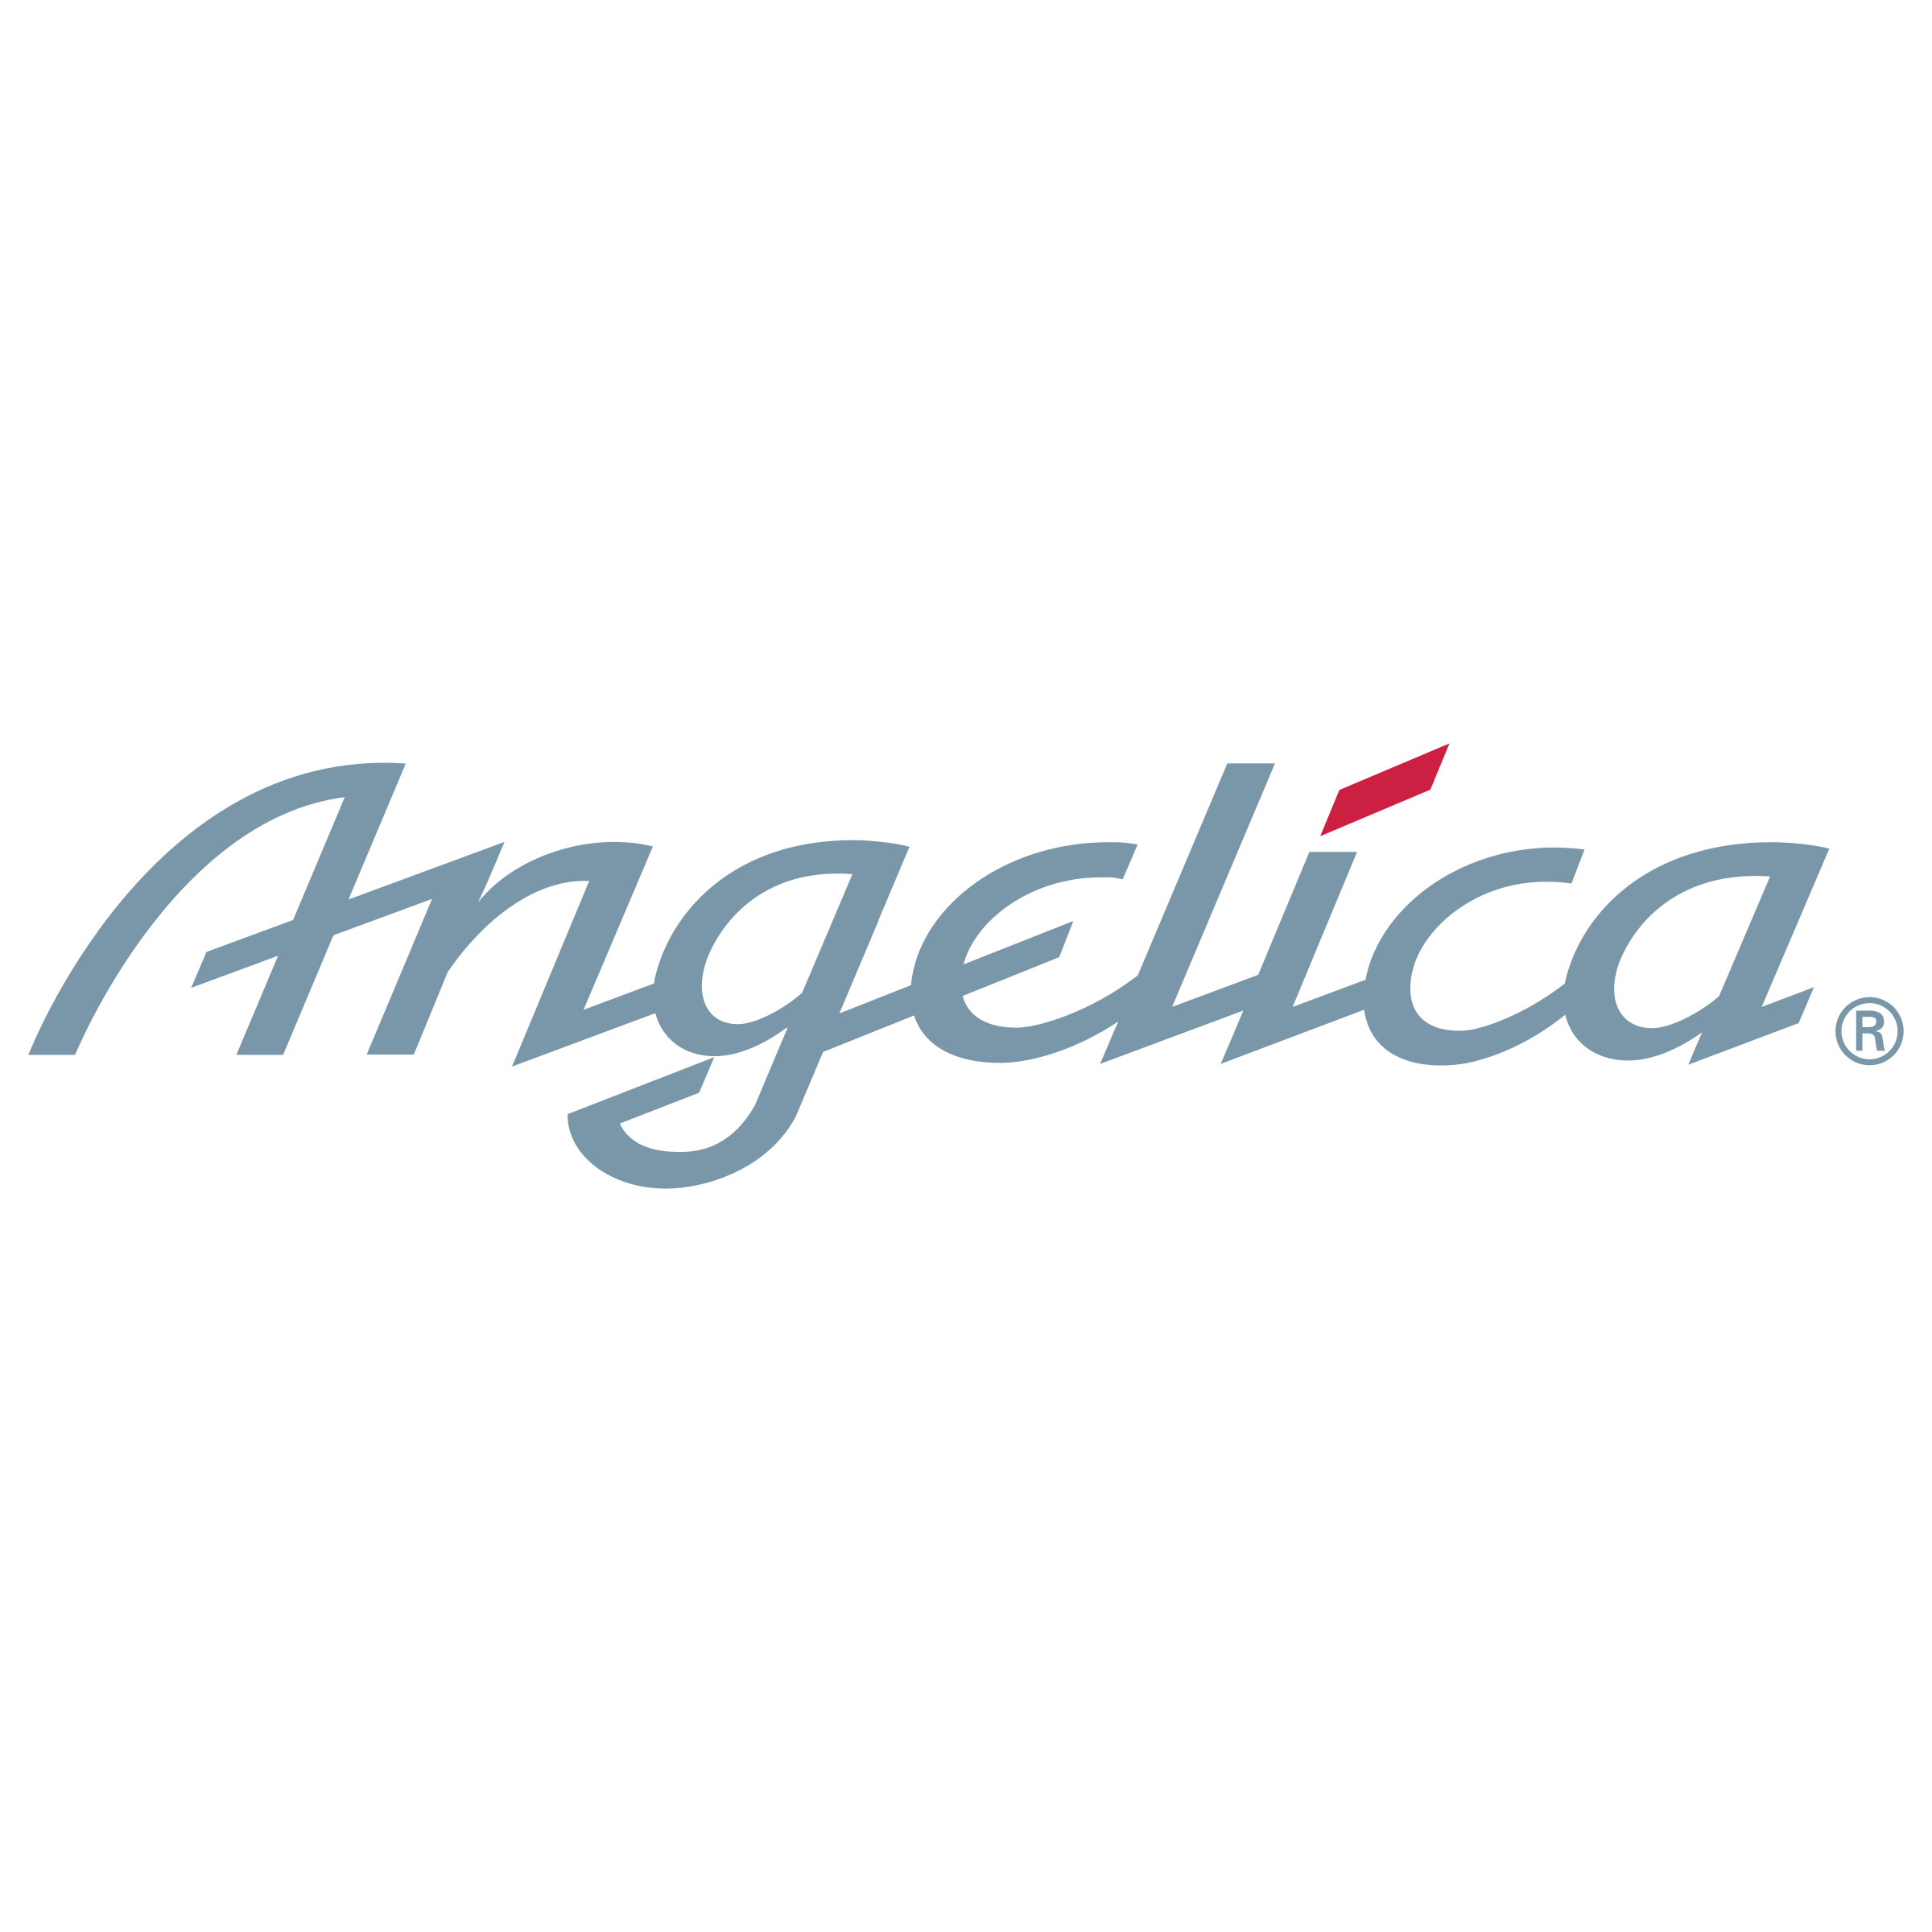 Angelica Logo - Angelica Logo PNG Transparent & SVG Vector